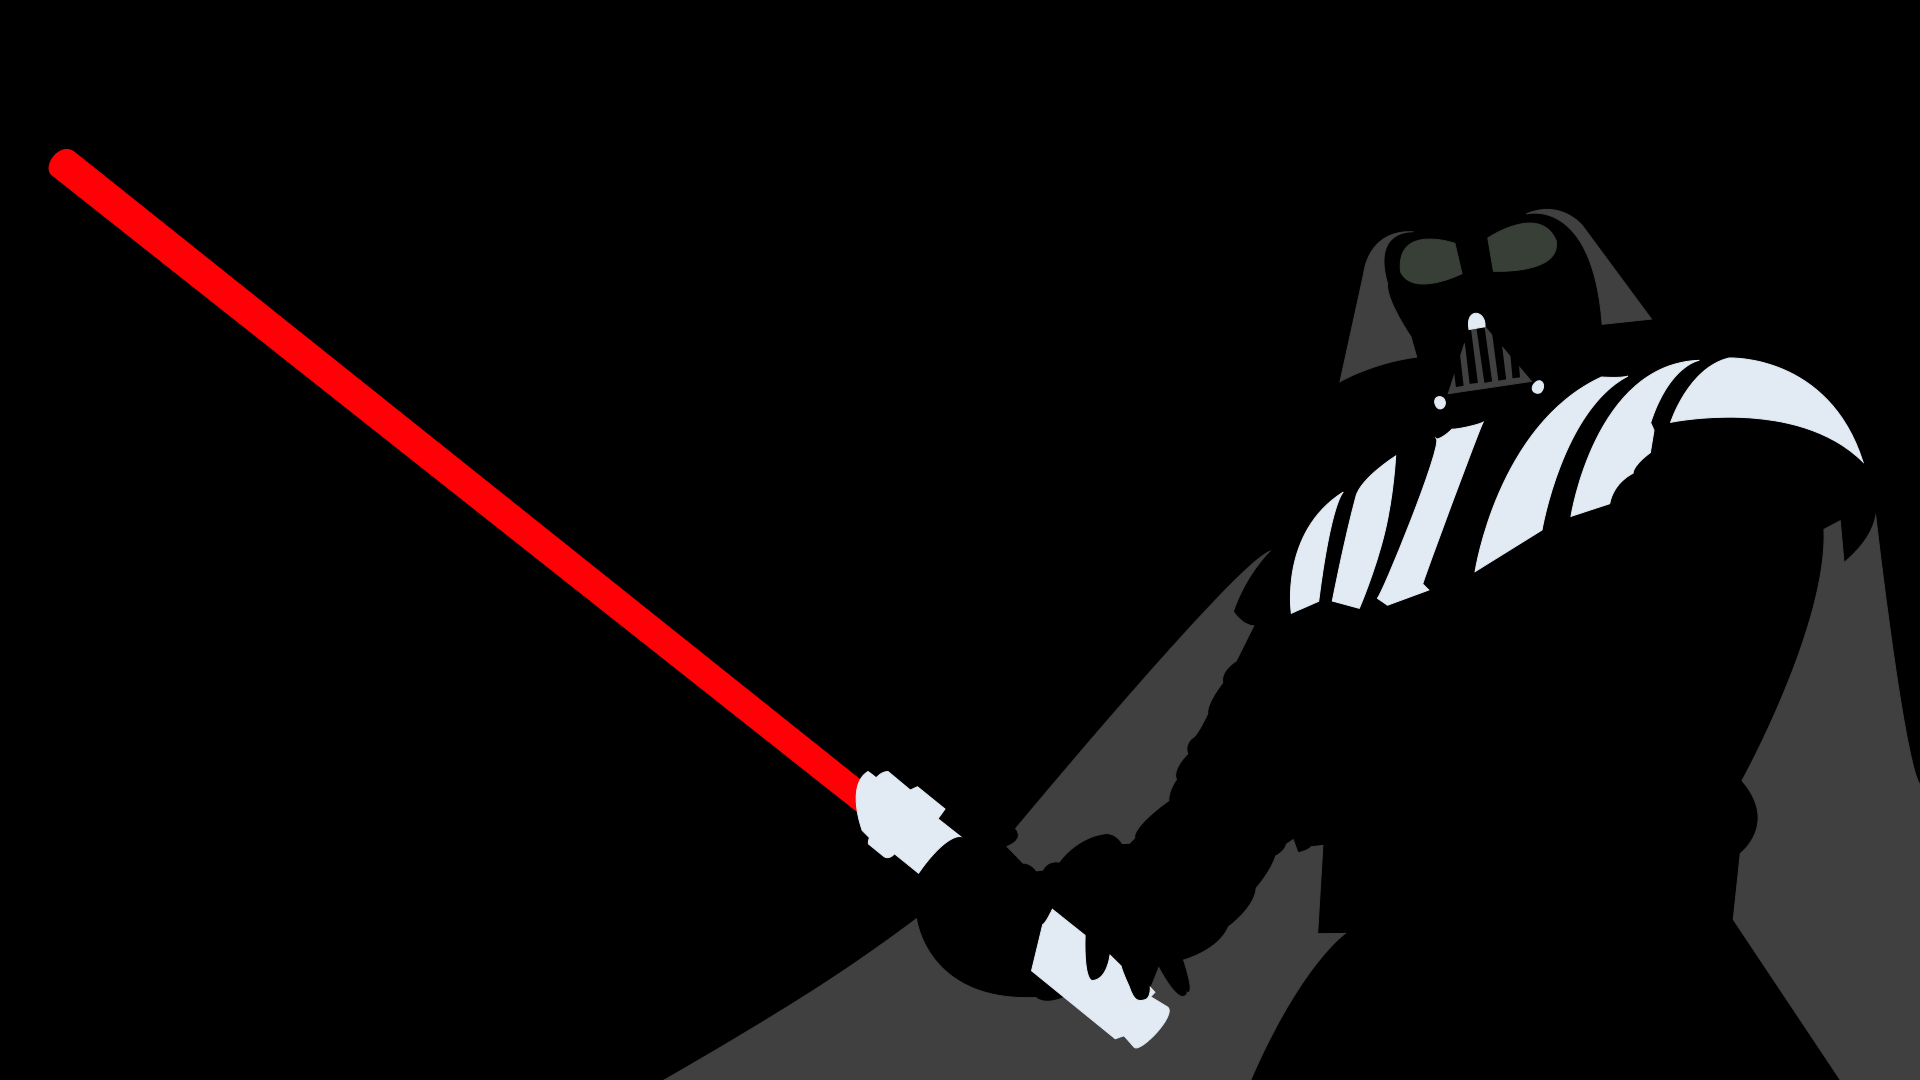 Request Minimal Darth Vader Wallpaper by Cheetashock. Darth